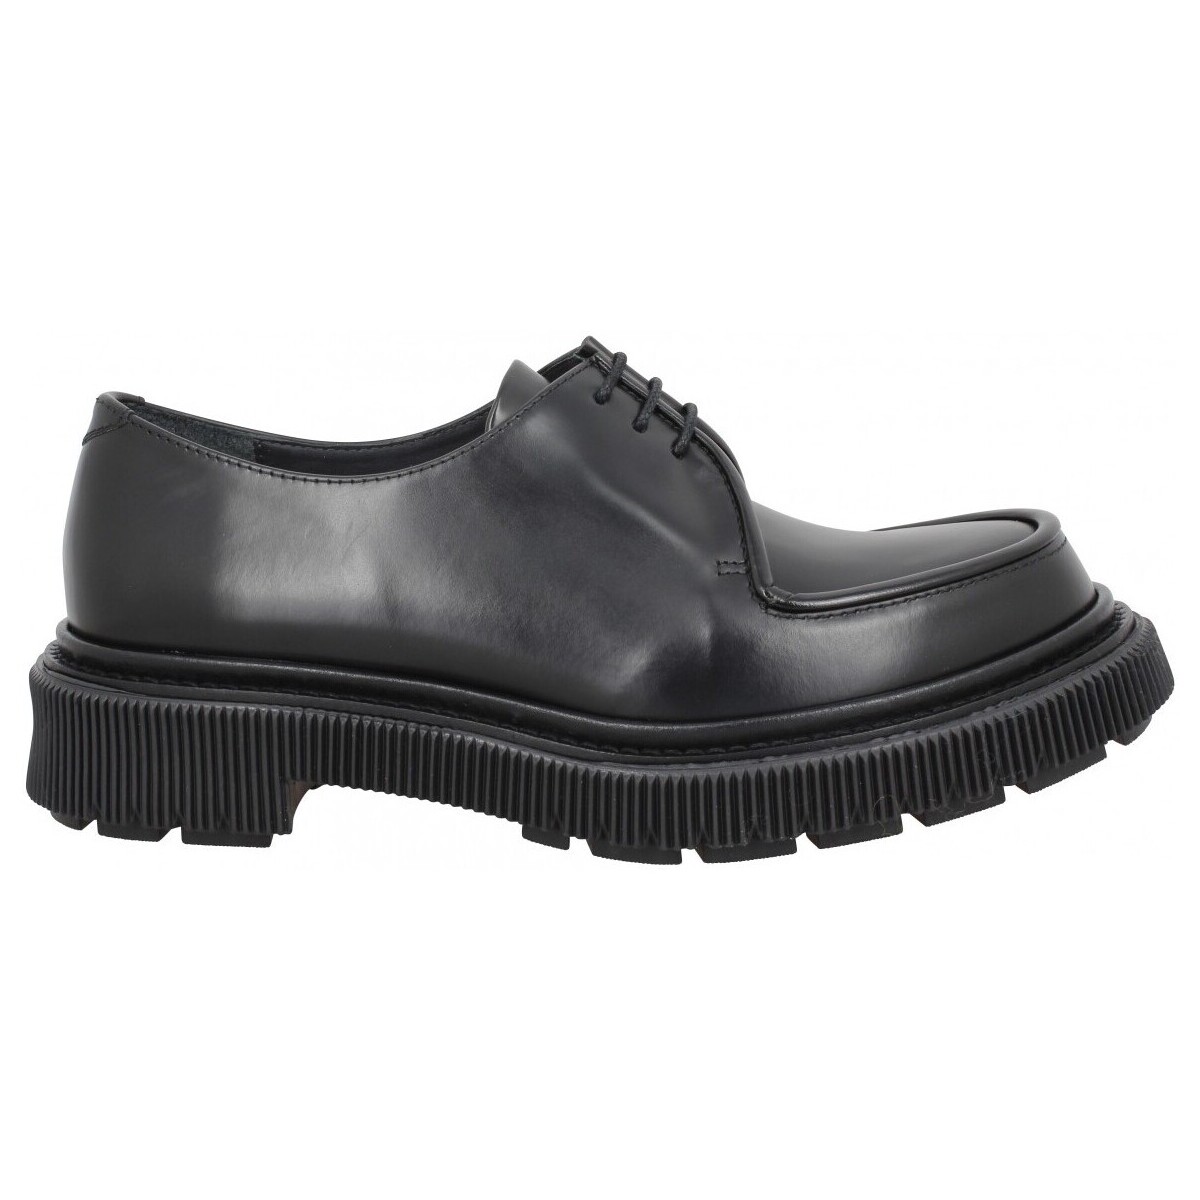 Cipők Női Oxford cipők Adieu Paris Type 124 Cuir Femme Noir Fekete 